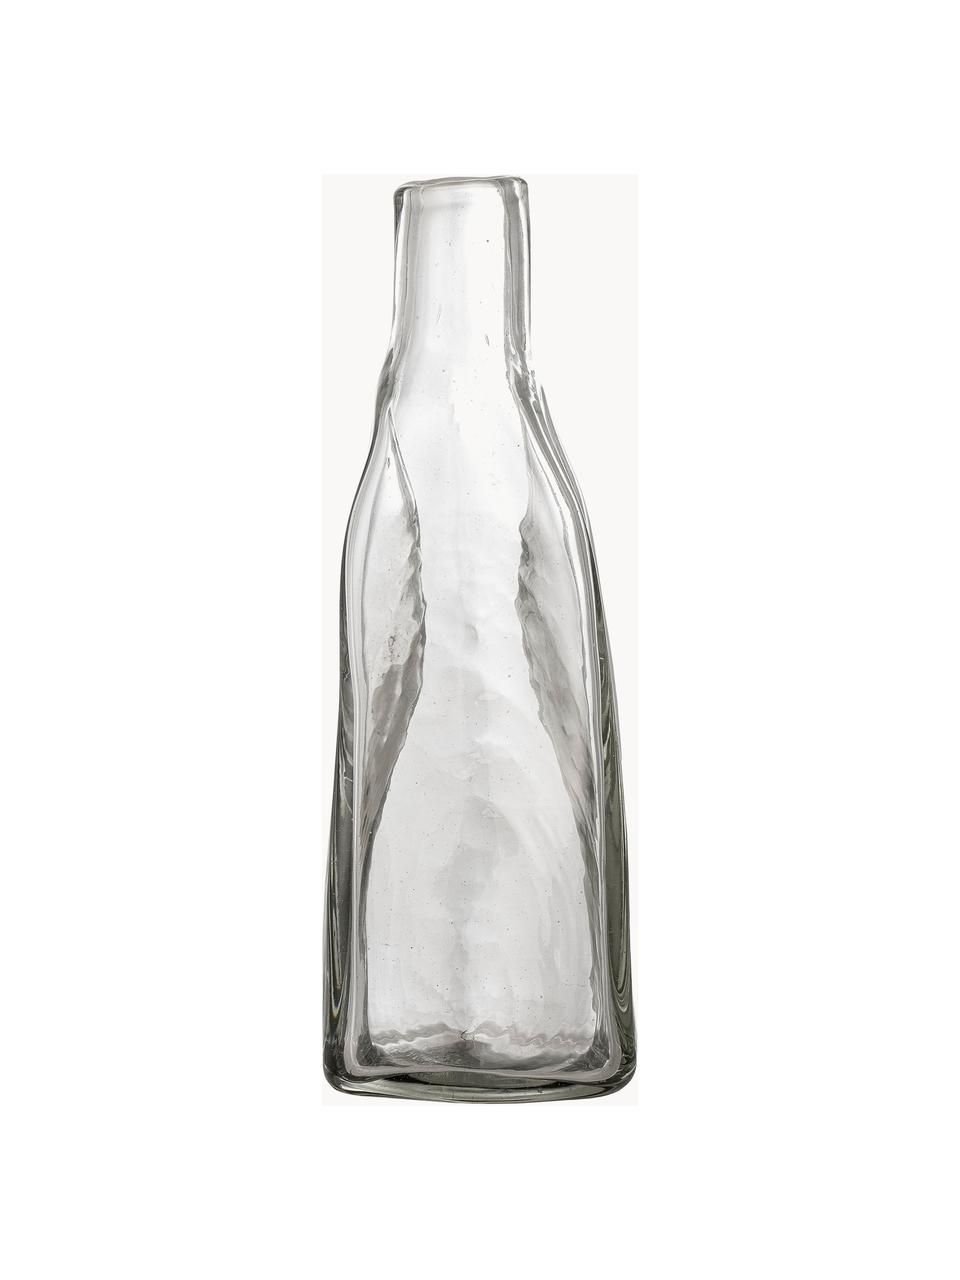 Mondgeblazen waterkaraf Lenka in biologische vorm, 500 ml, Glas, Transparant, 500 ml